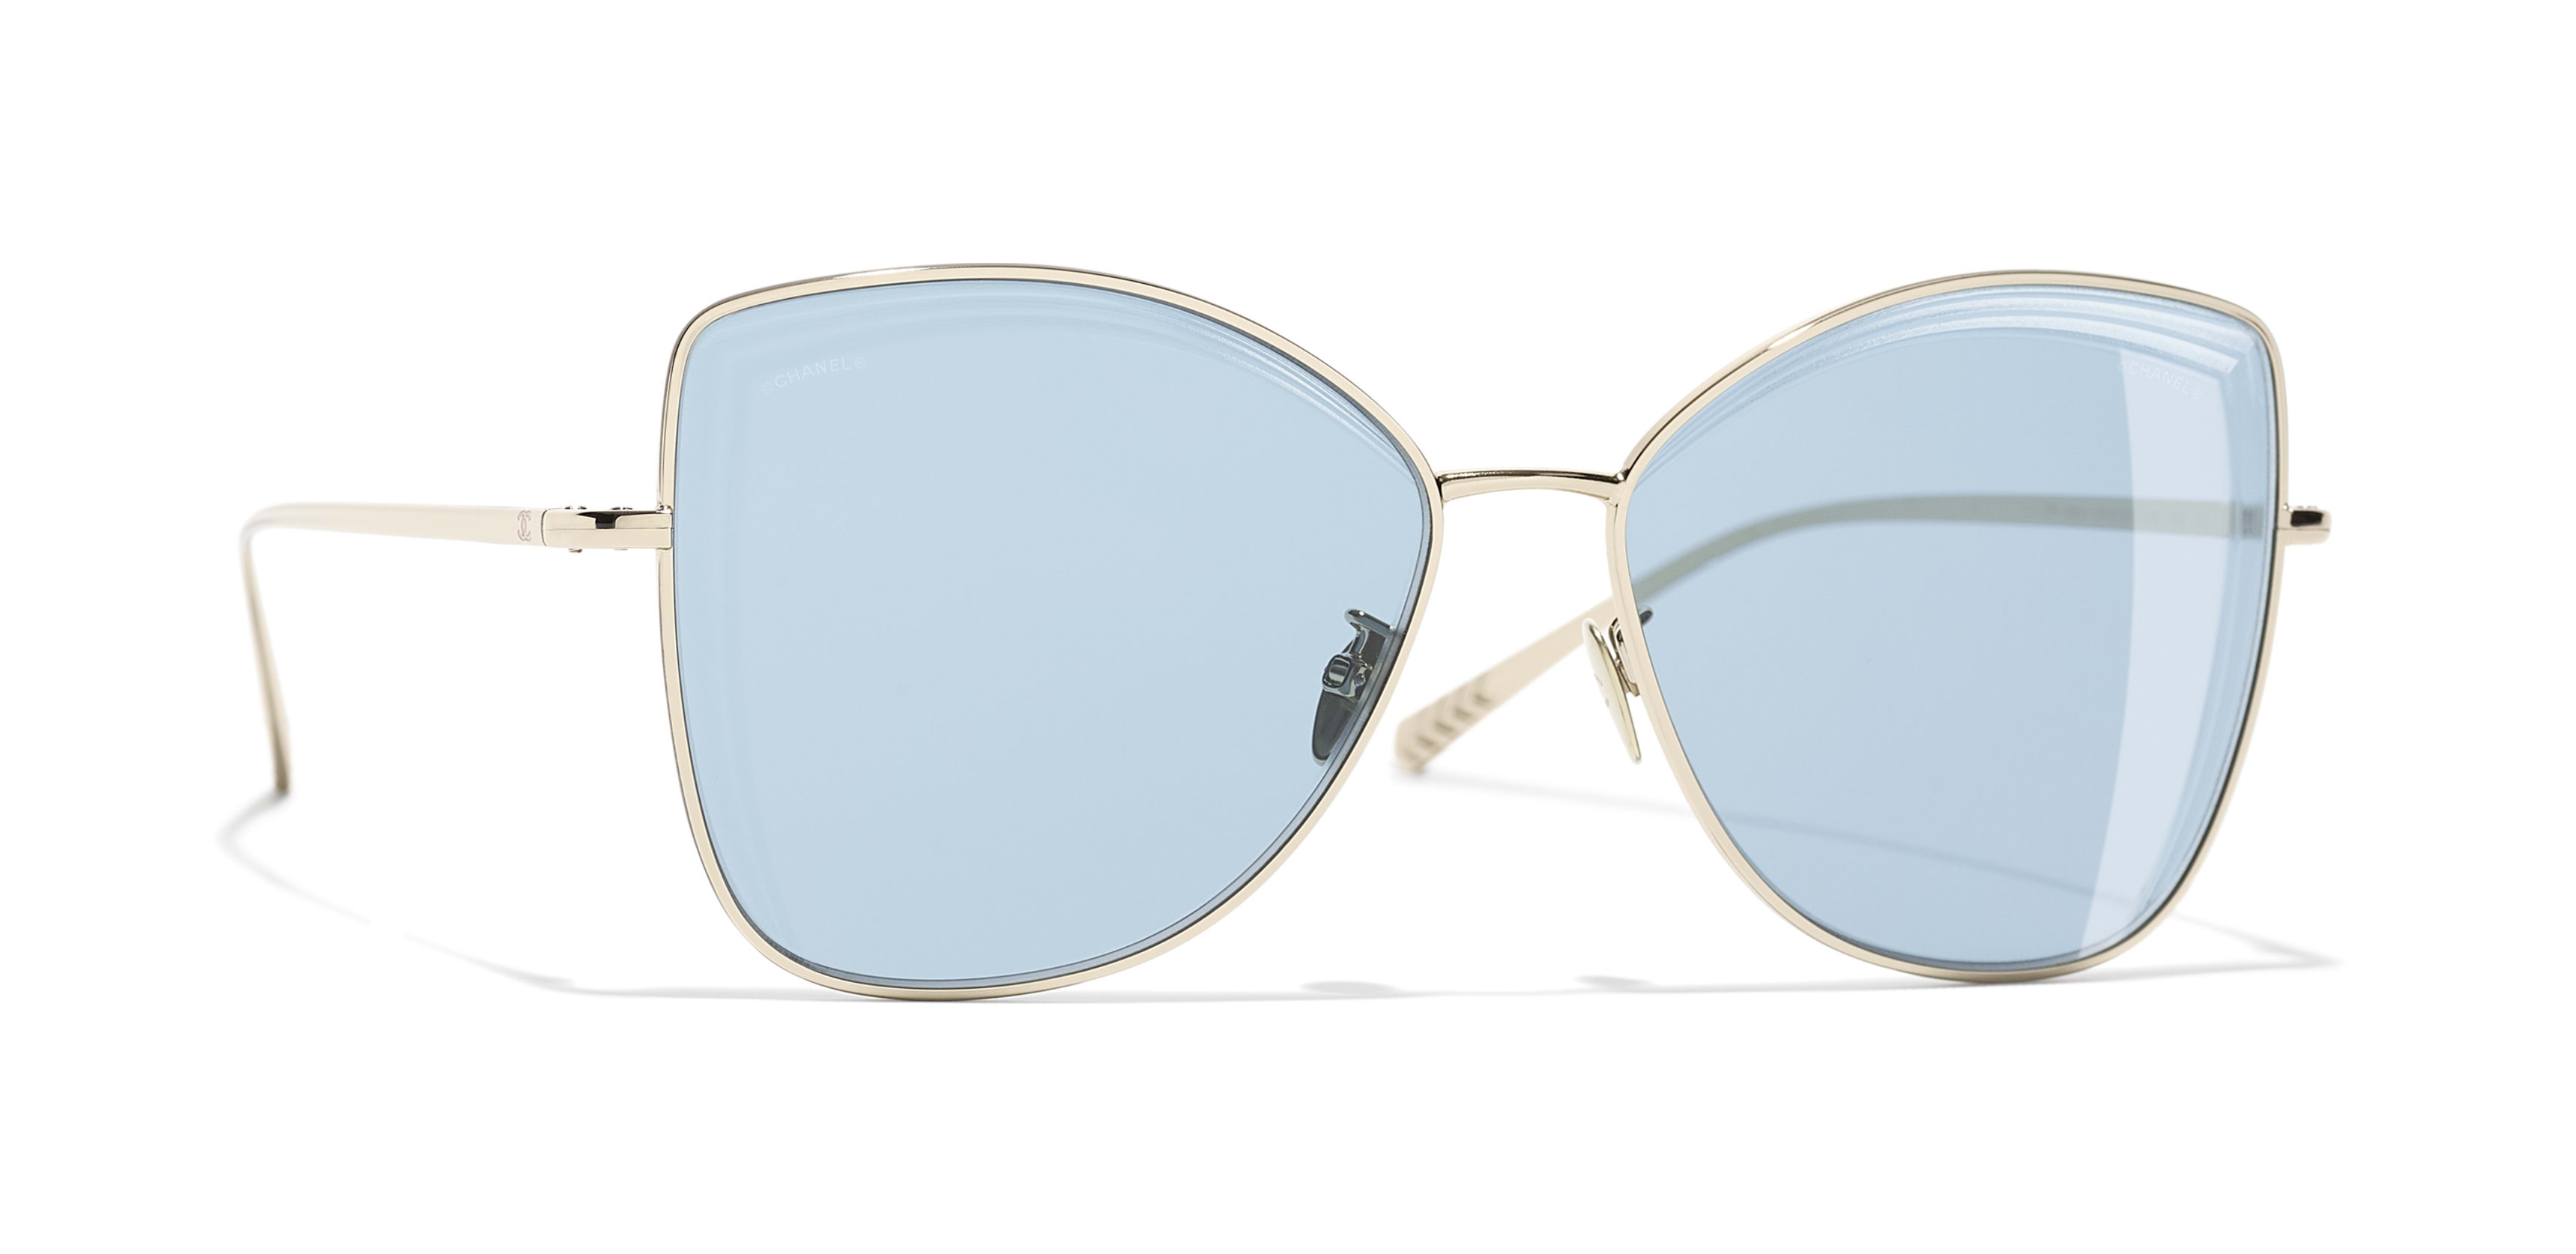 Chanel Butterfly Blue Light Glasses - Metal, Gold - Polarized - UV Protected - Women's Sunglasses - 2212S C395/SB